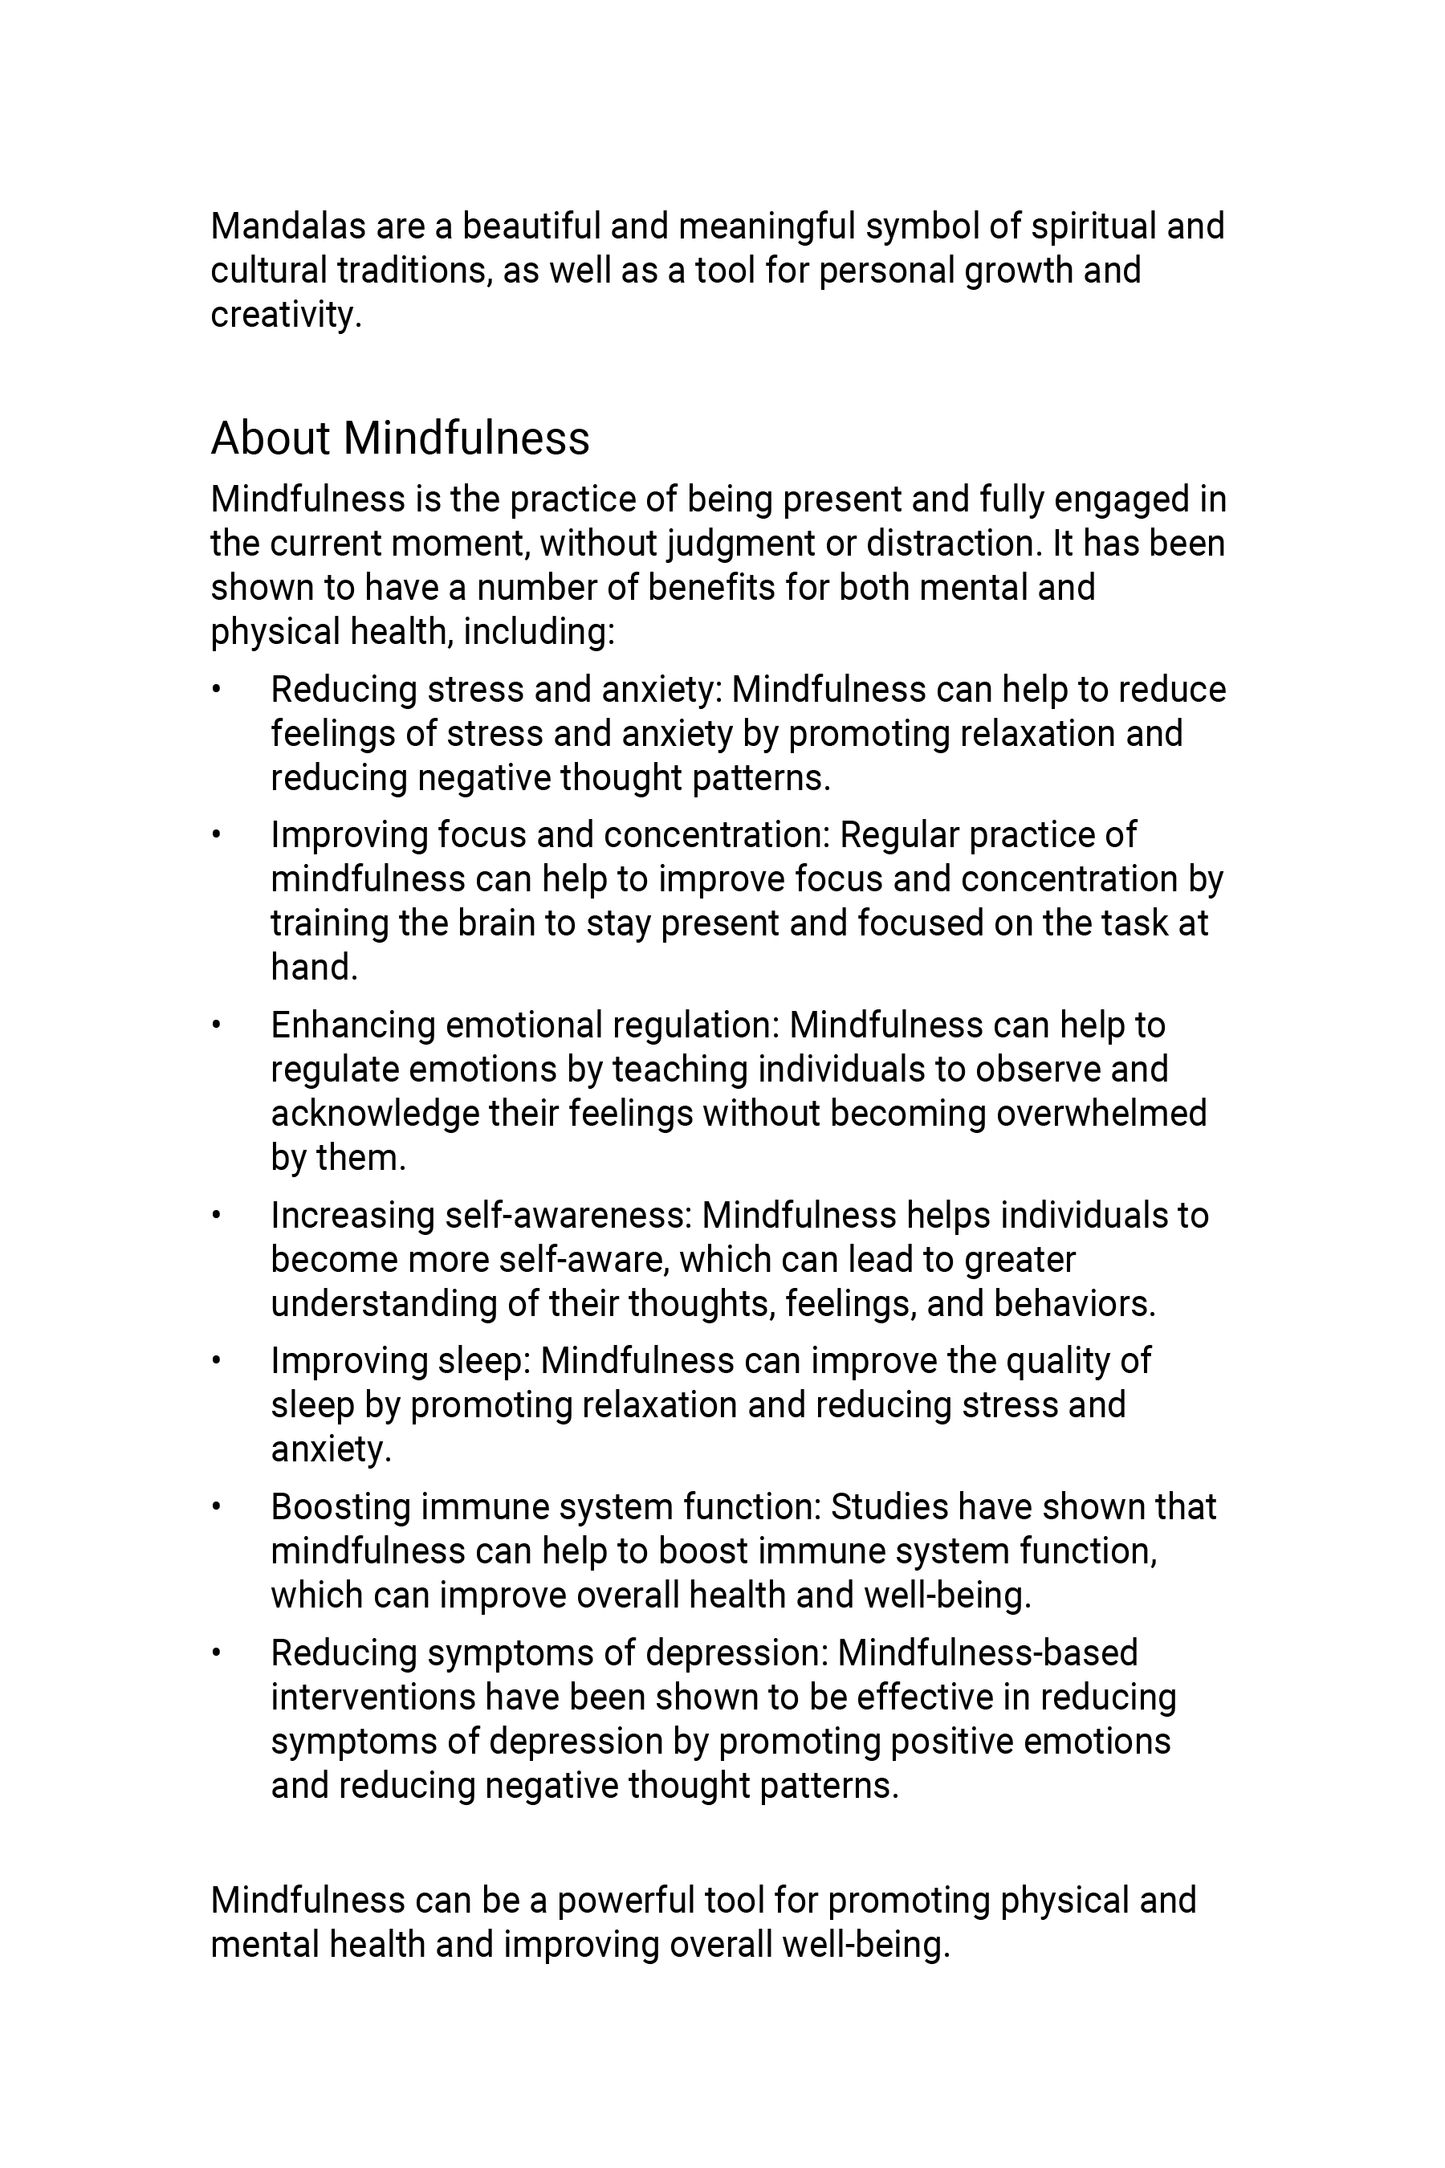 Mandala Mazes: Mindfulness exercises to relax and de-stress.